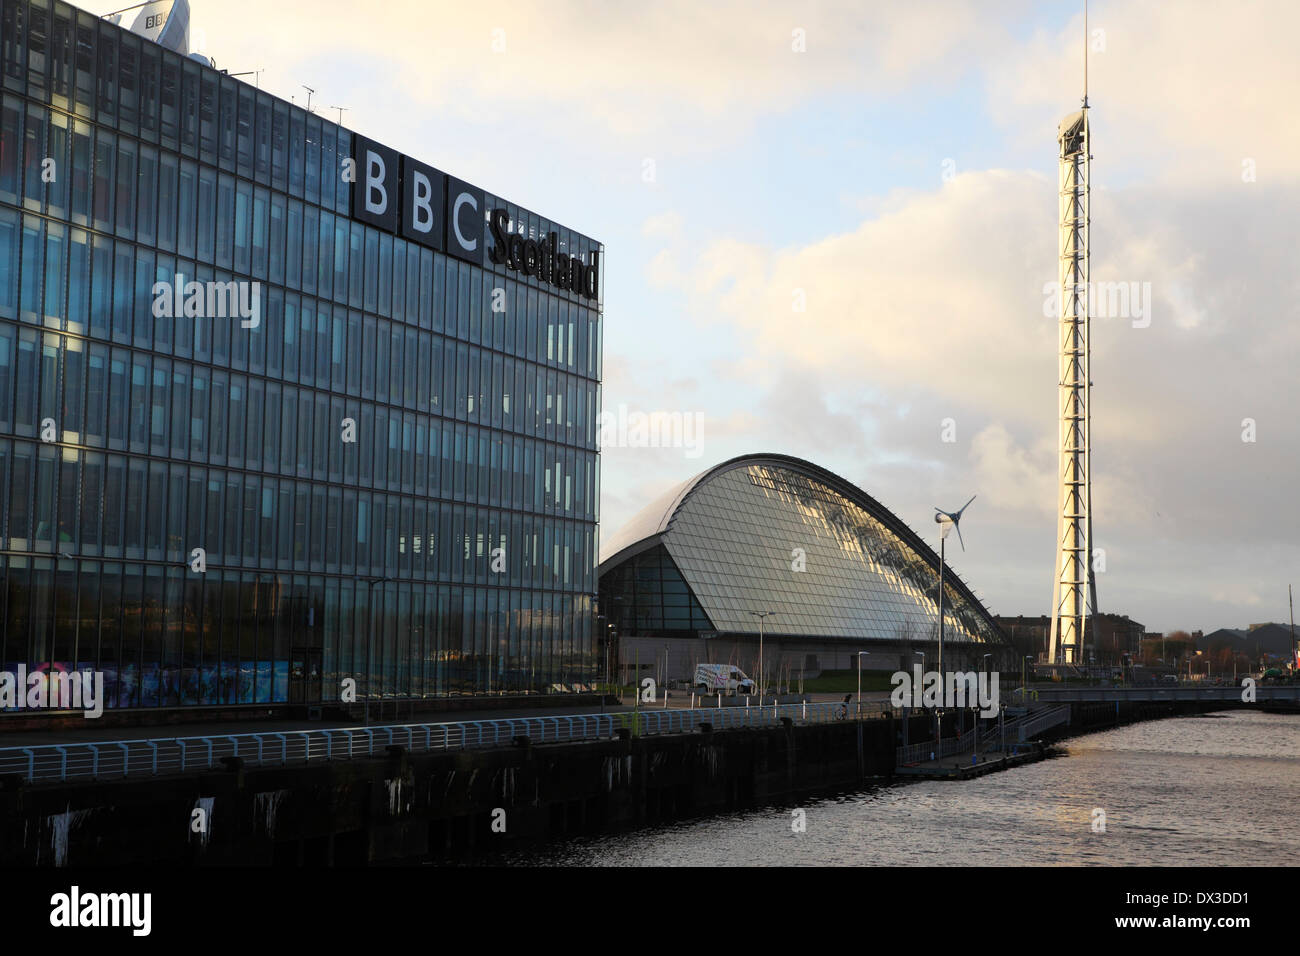 The BBC Scotland building in Glasgow, Scotland. Stock Photo